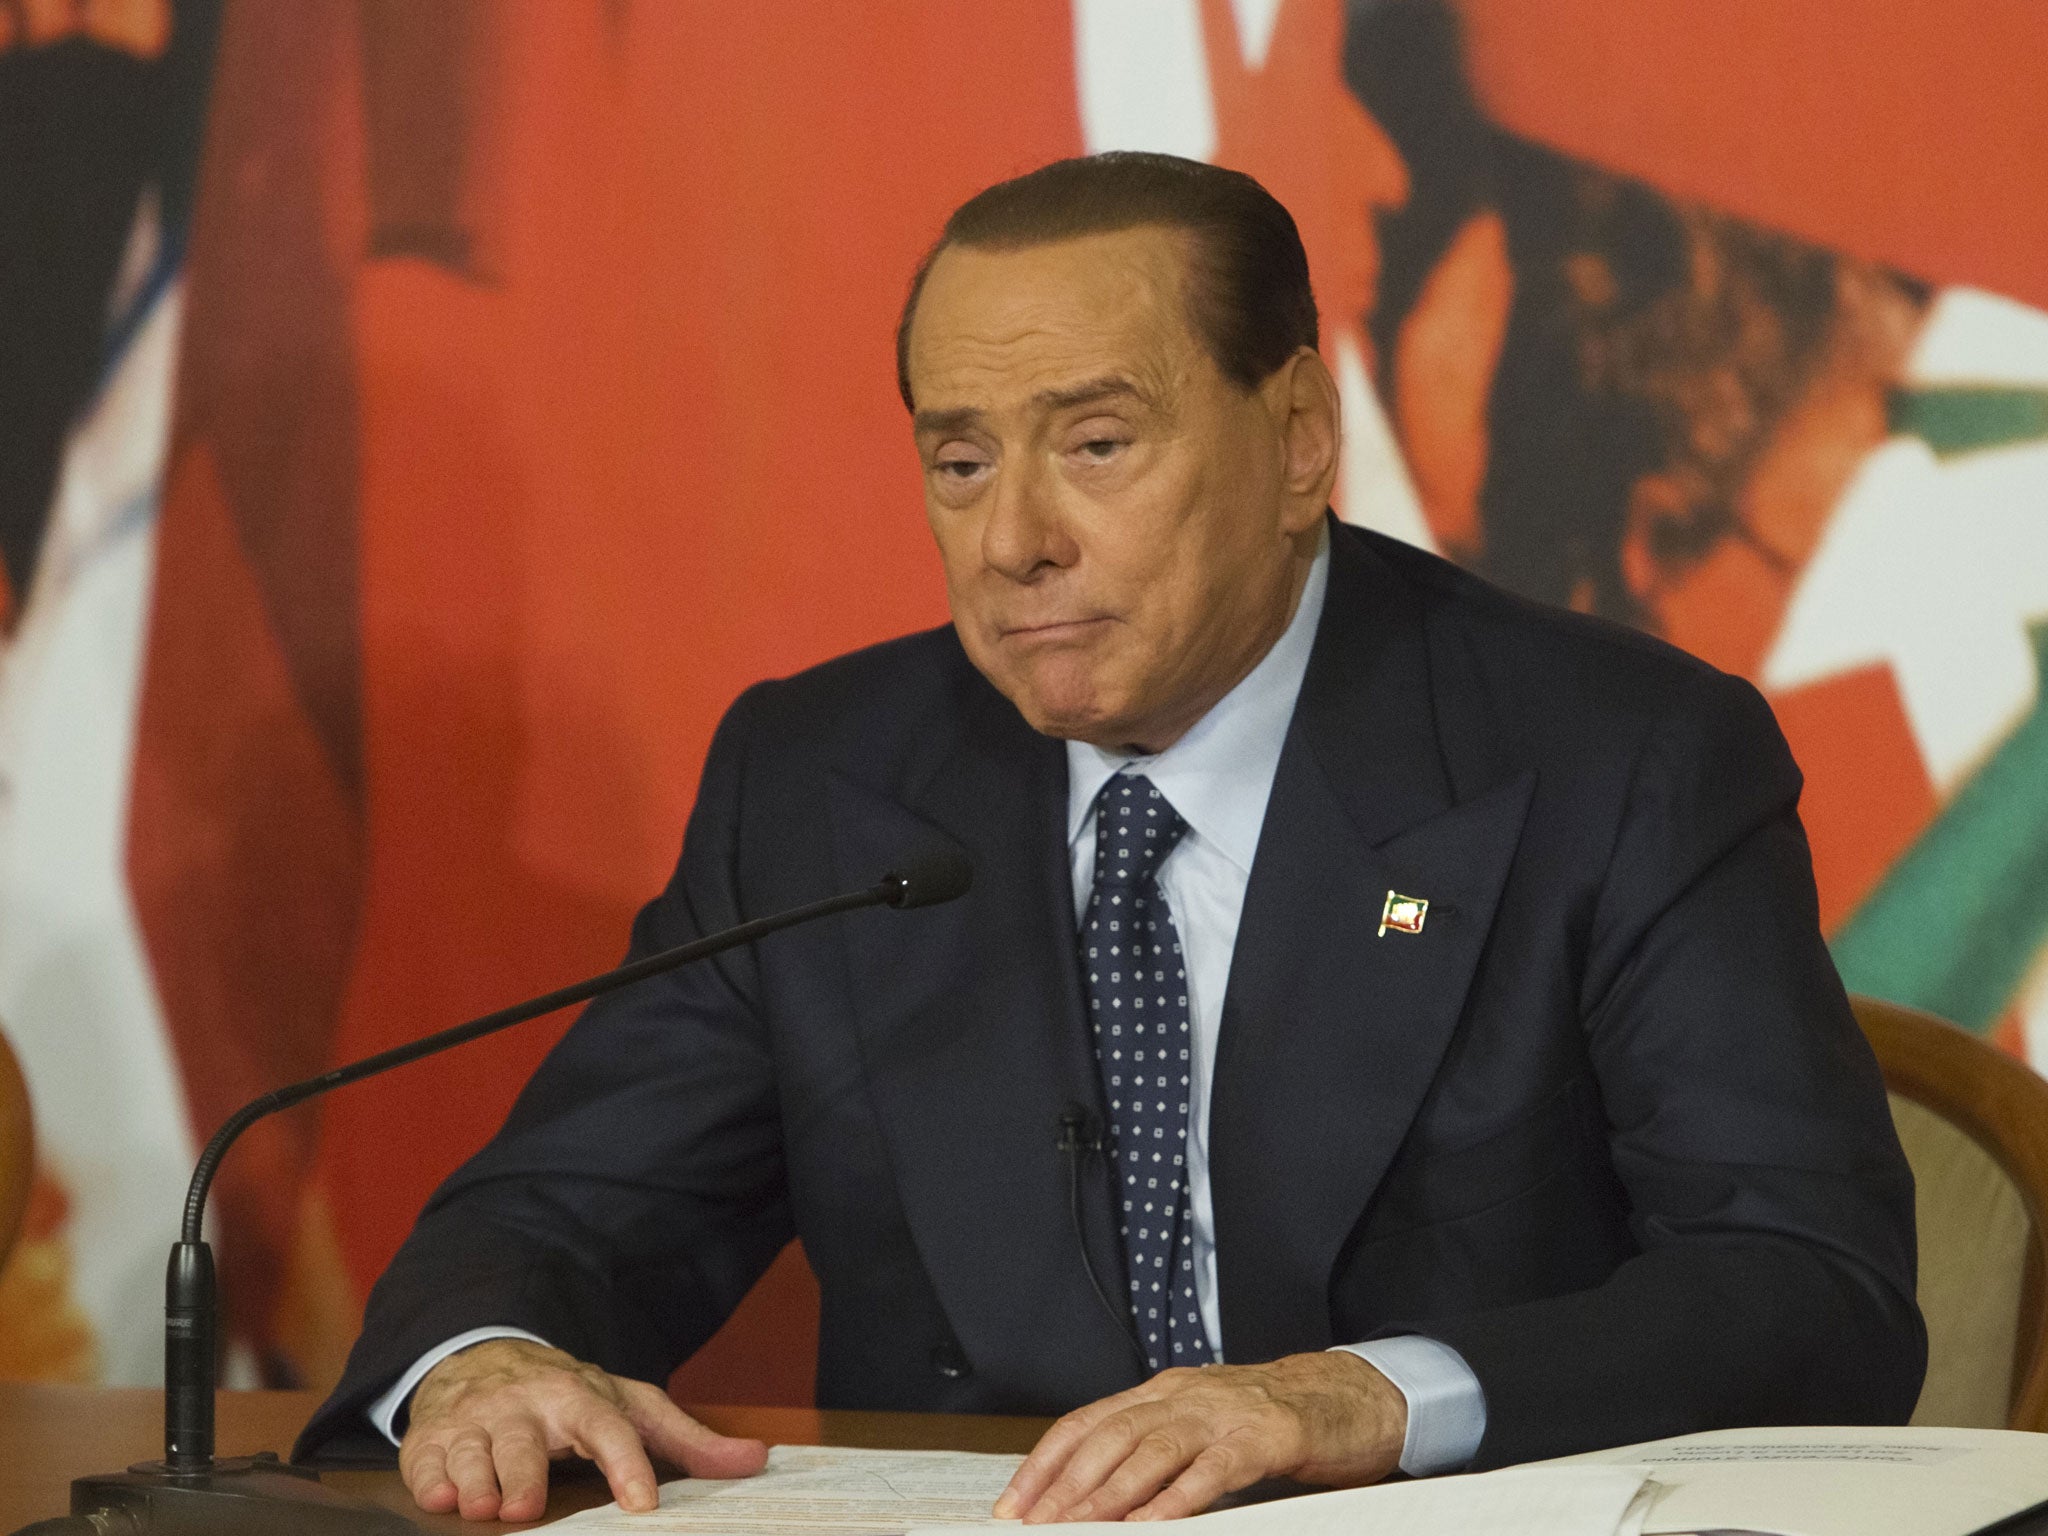 Silvio Berlusconi has begged senators not to kick him out of parliament